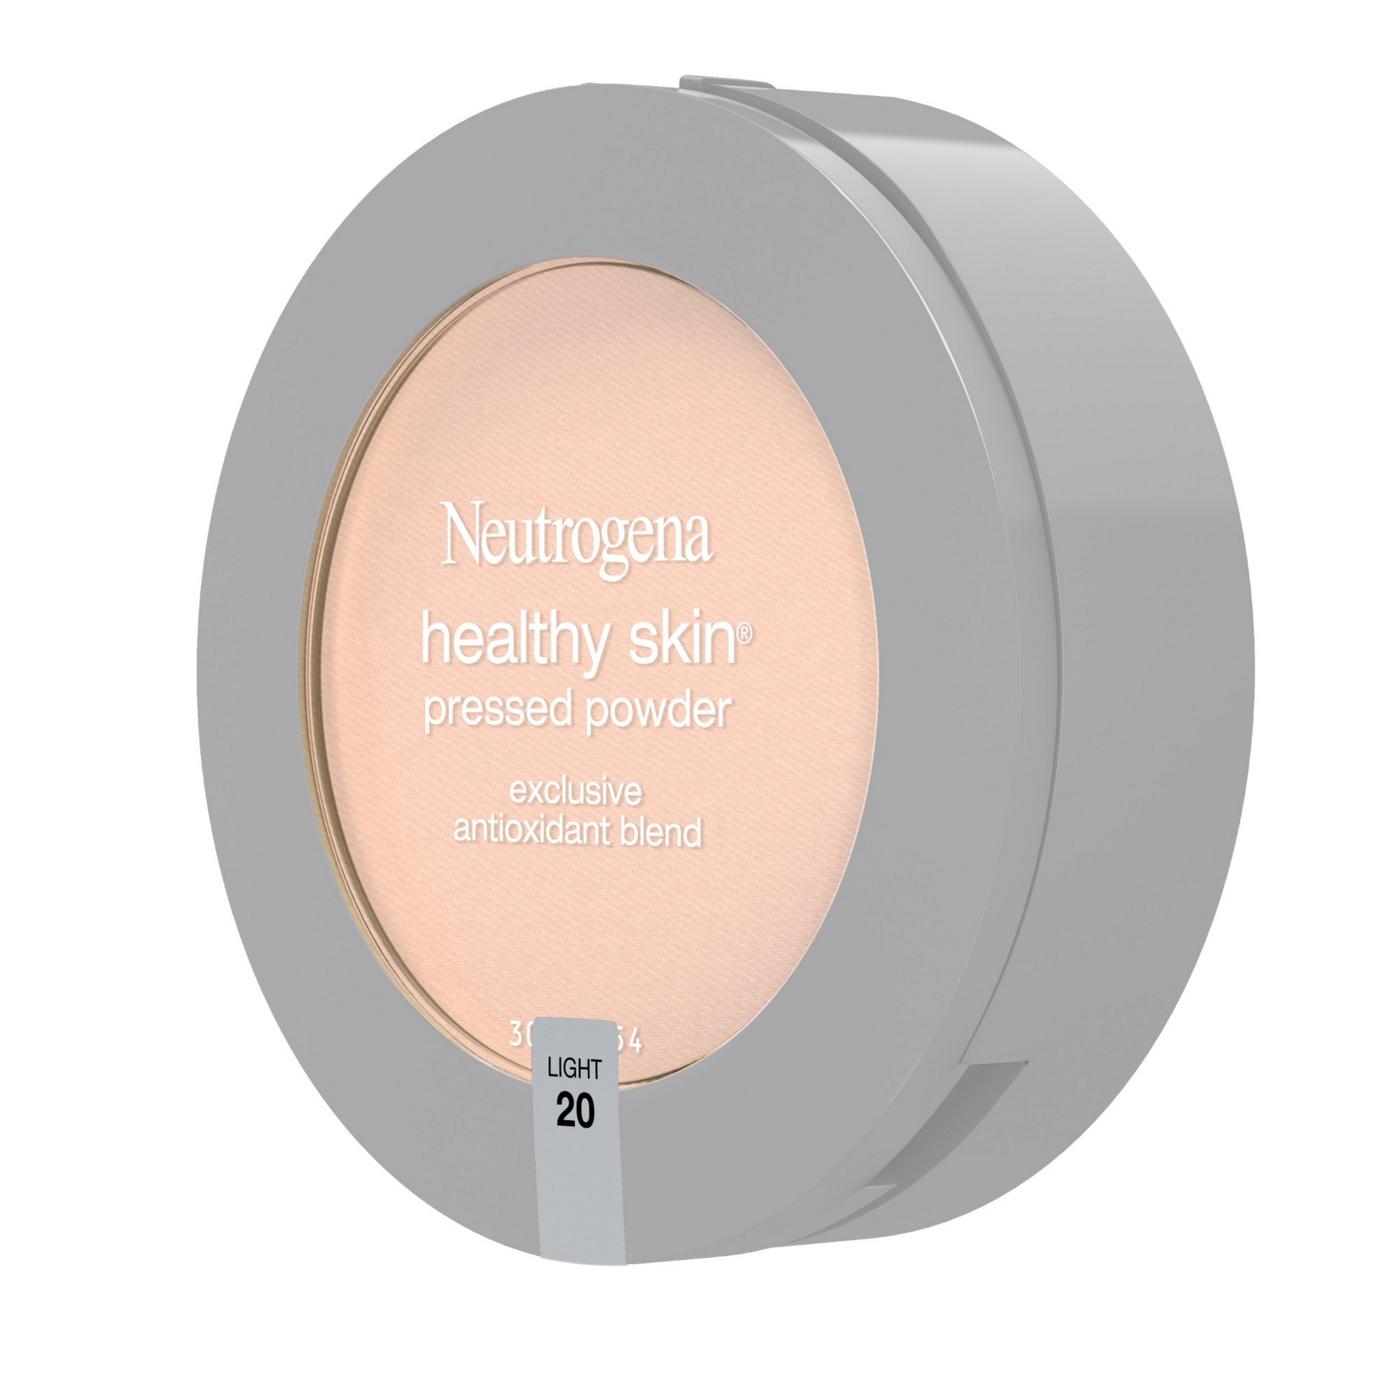 Neutrogena Healthy Skin Pressed Powder 20 Light; image 3 of 5